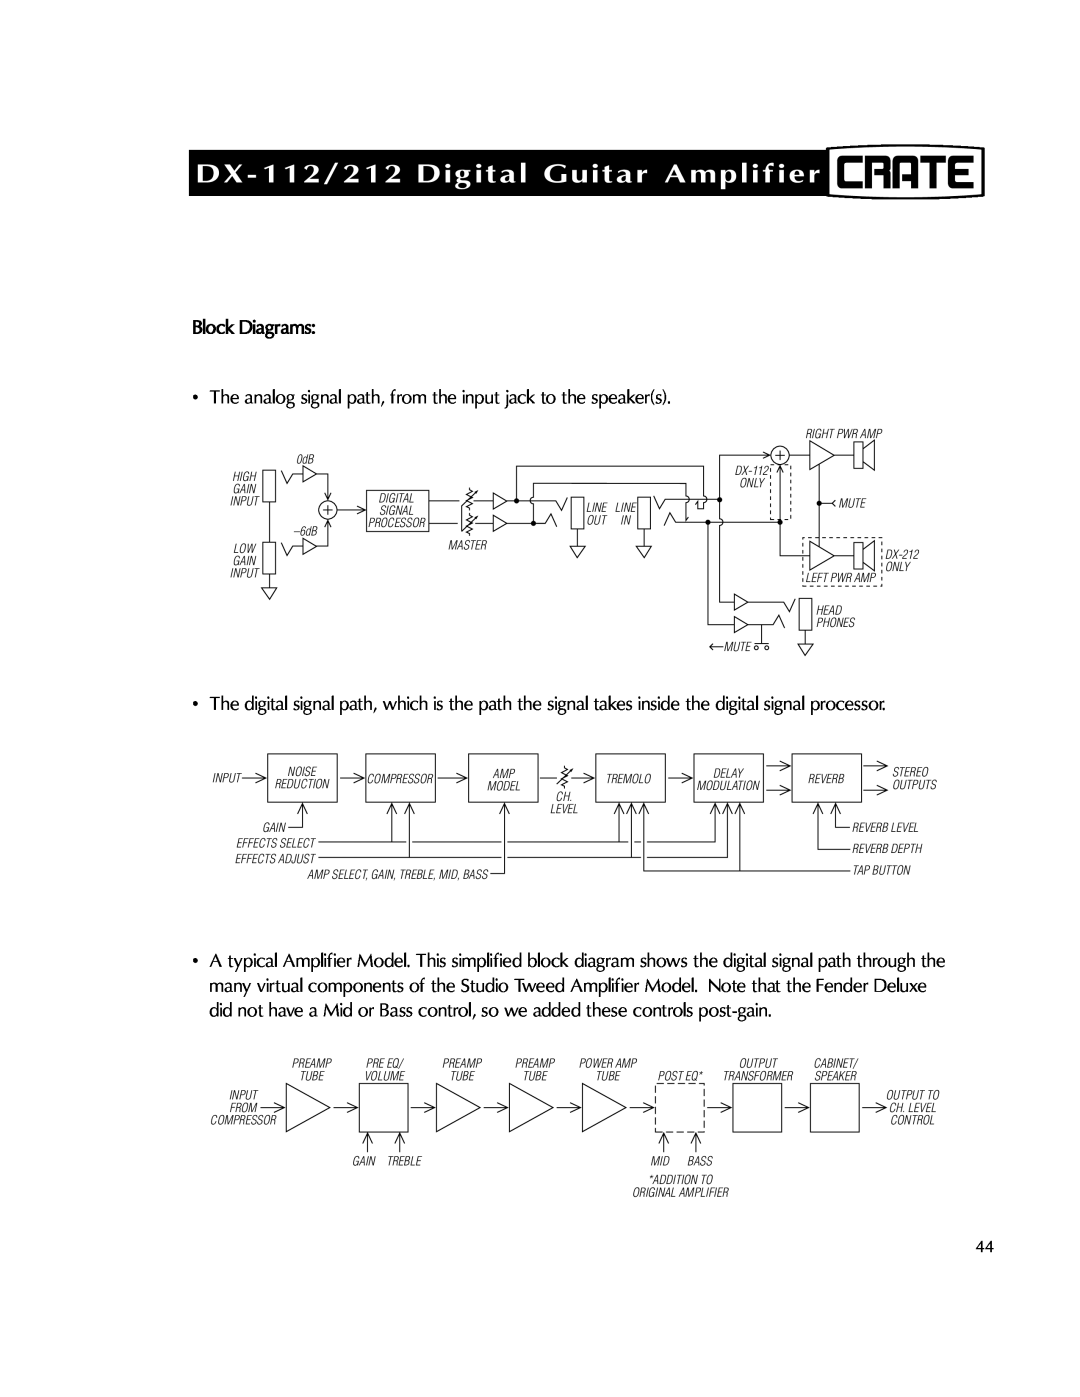 Crate Amplifiers DX-212 manual DX-112/212Digital Guitar Amplifier, Block Diagrams 